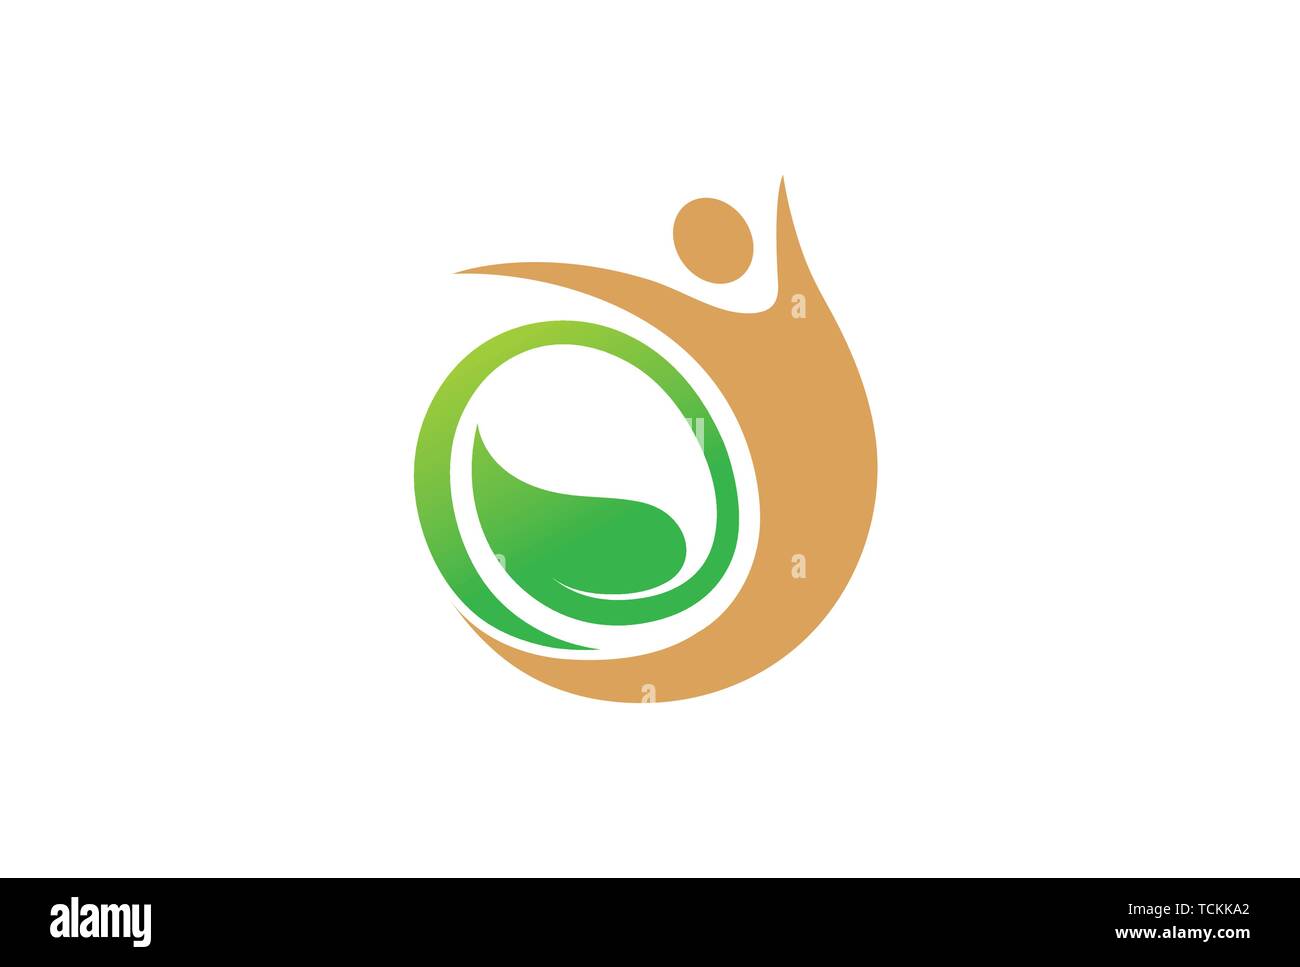 Creative Leaf Seed Body Symbol Design Illustration Stock Vector